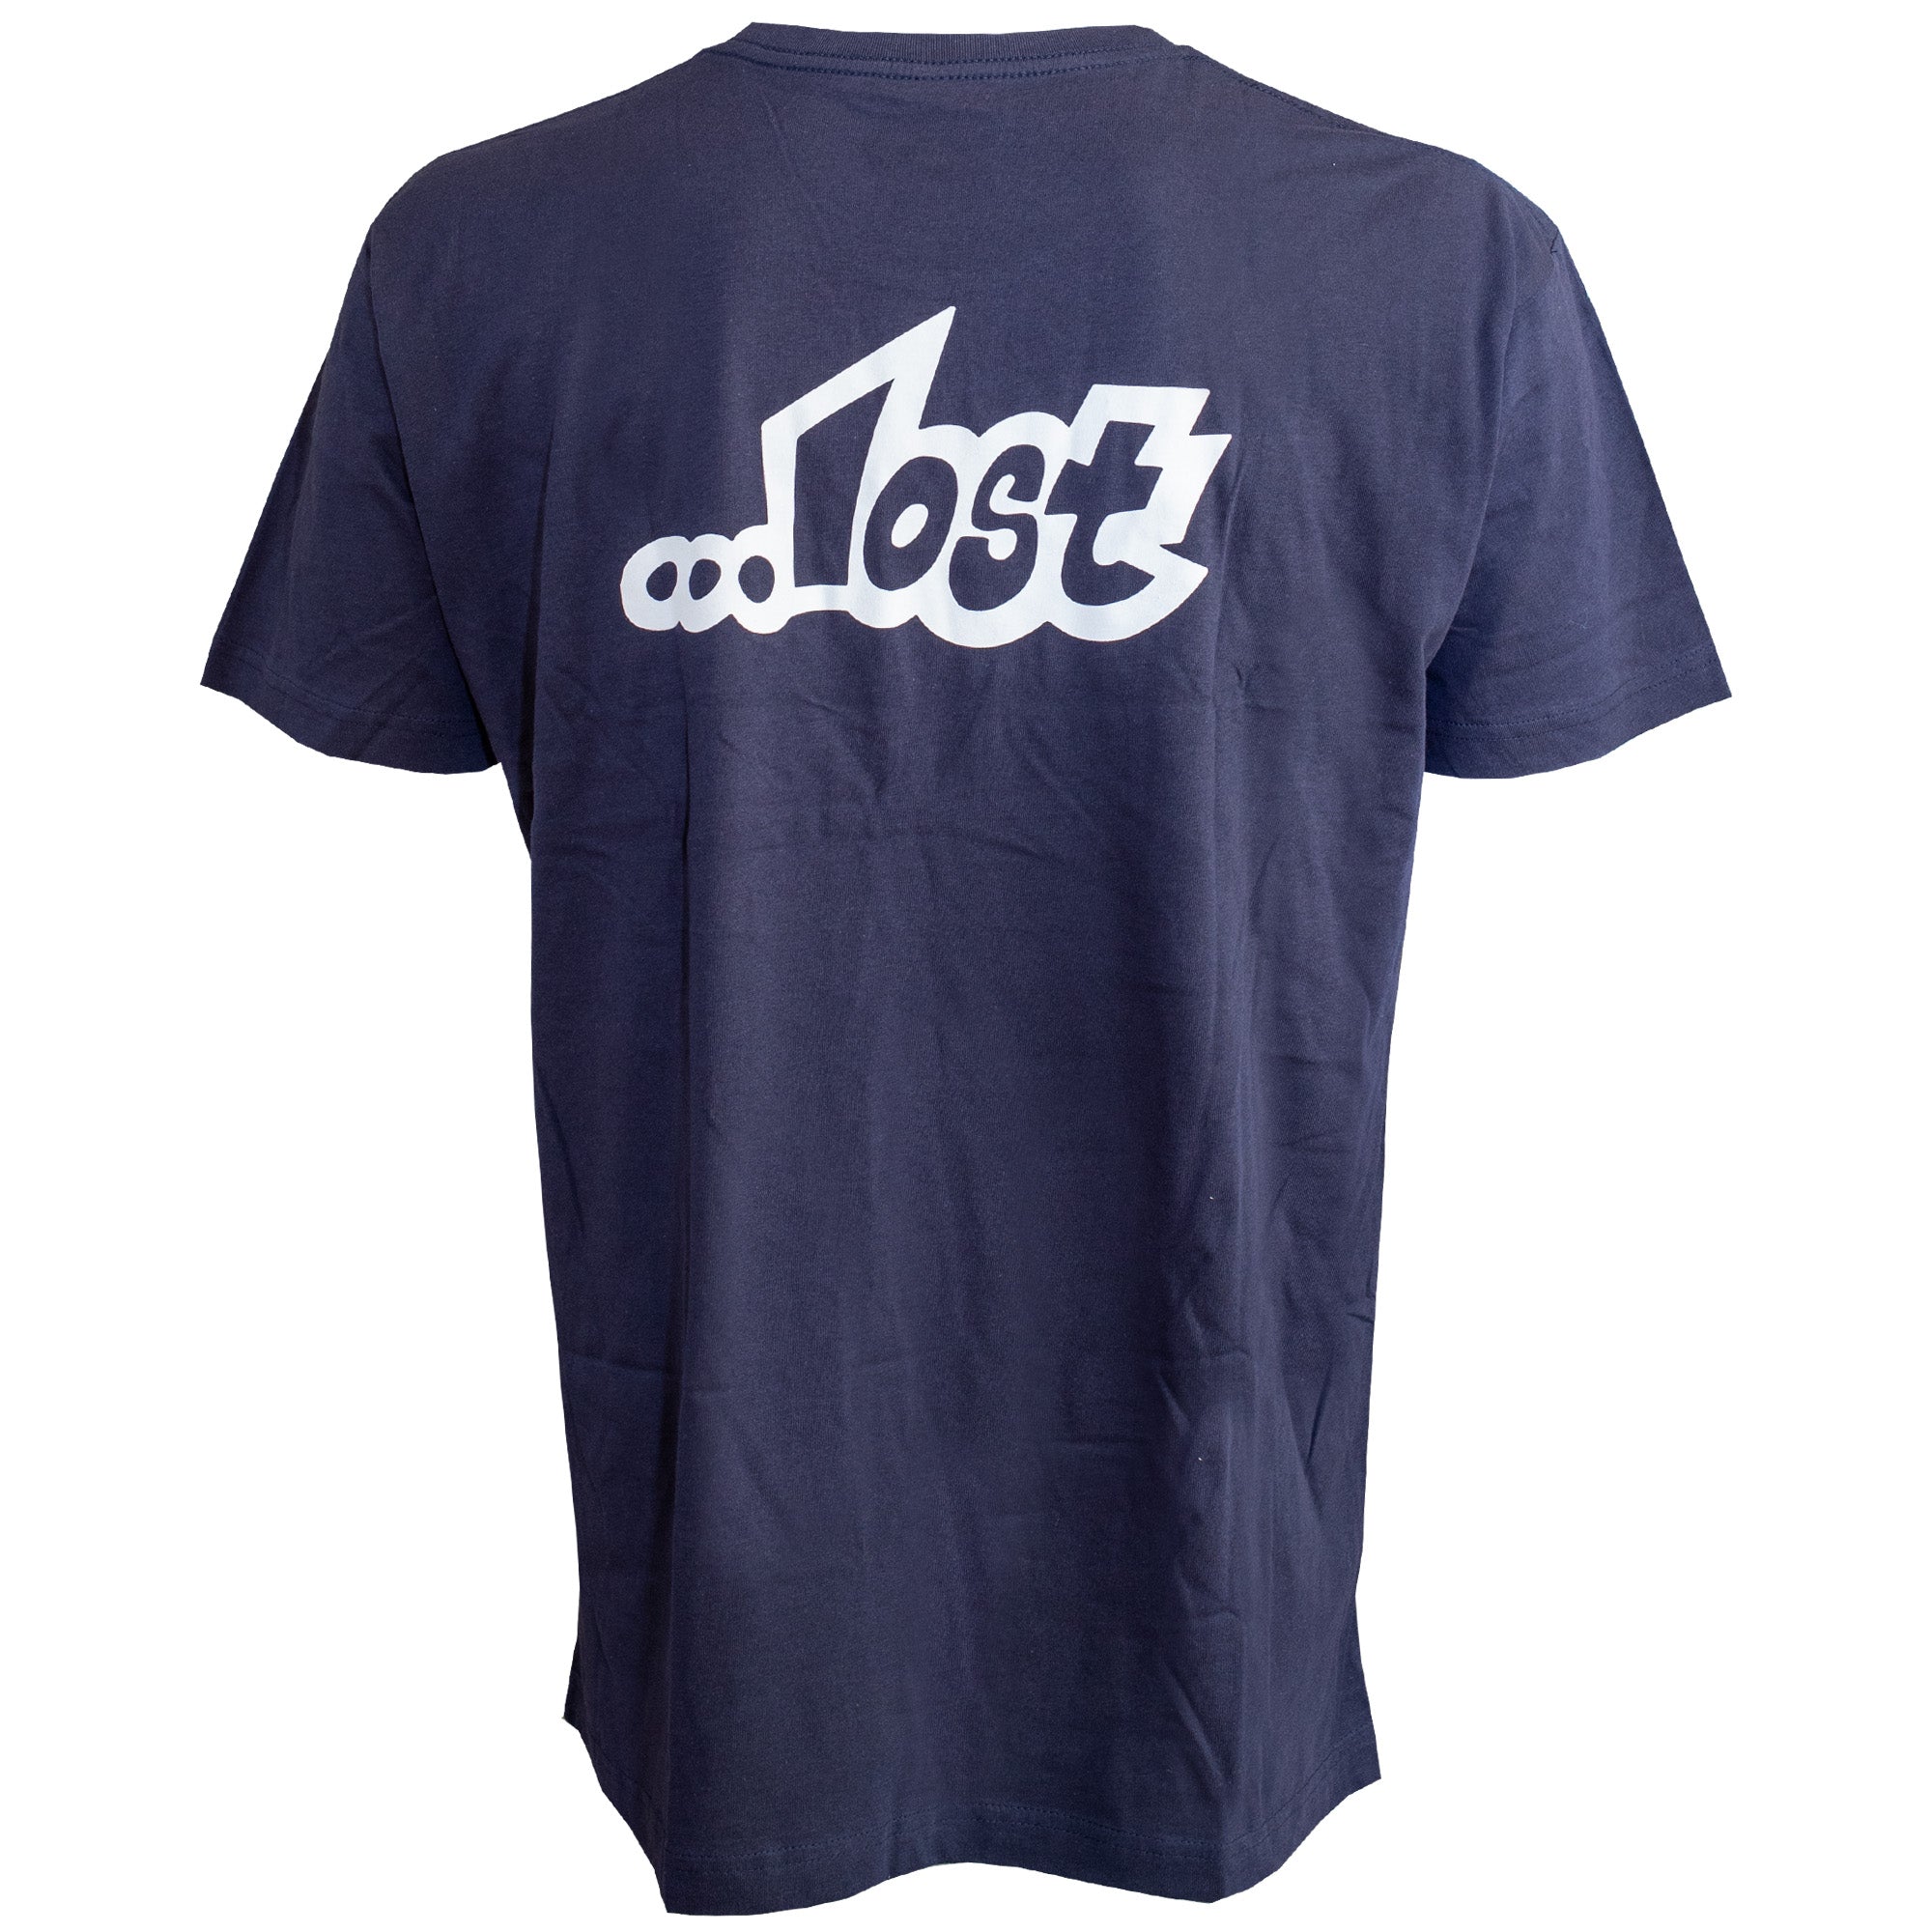 Lost Corp Men's S/S T-Shirt